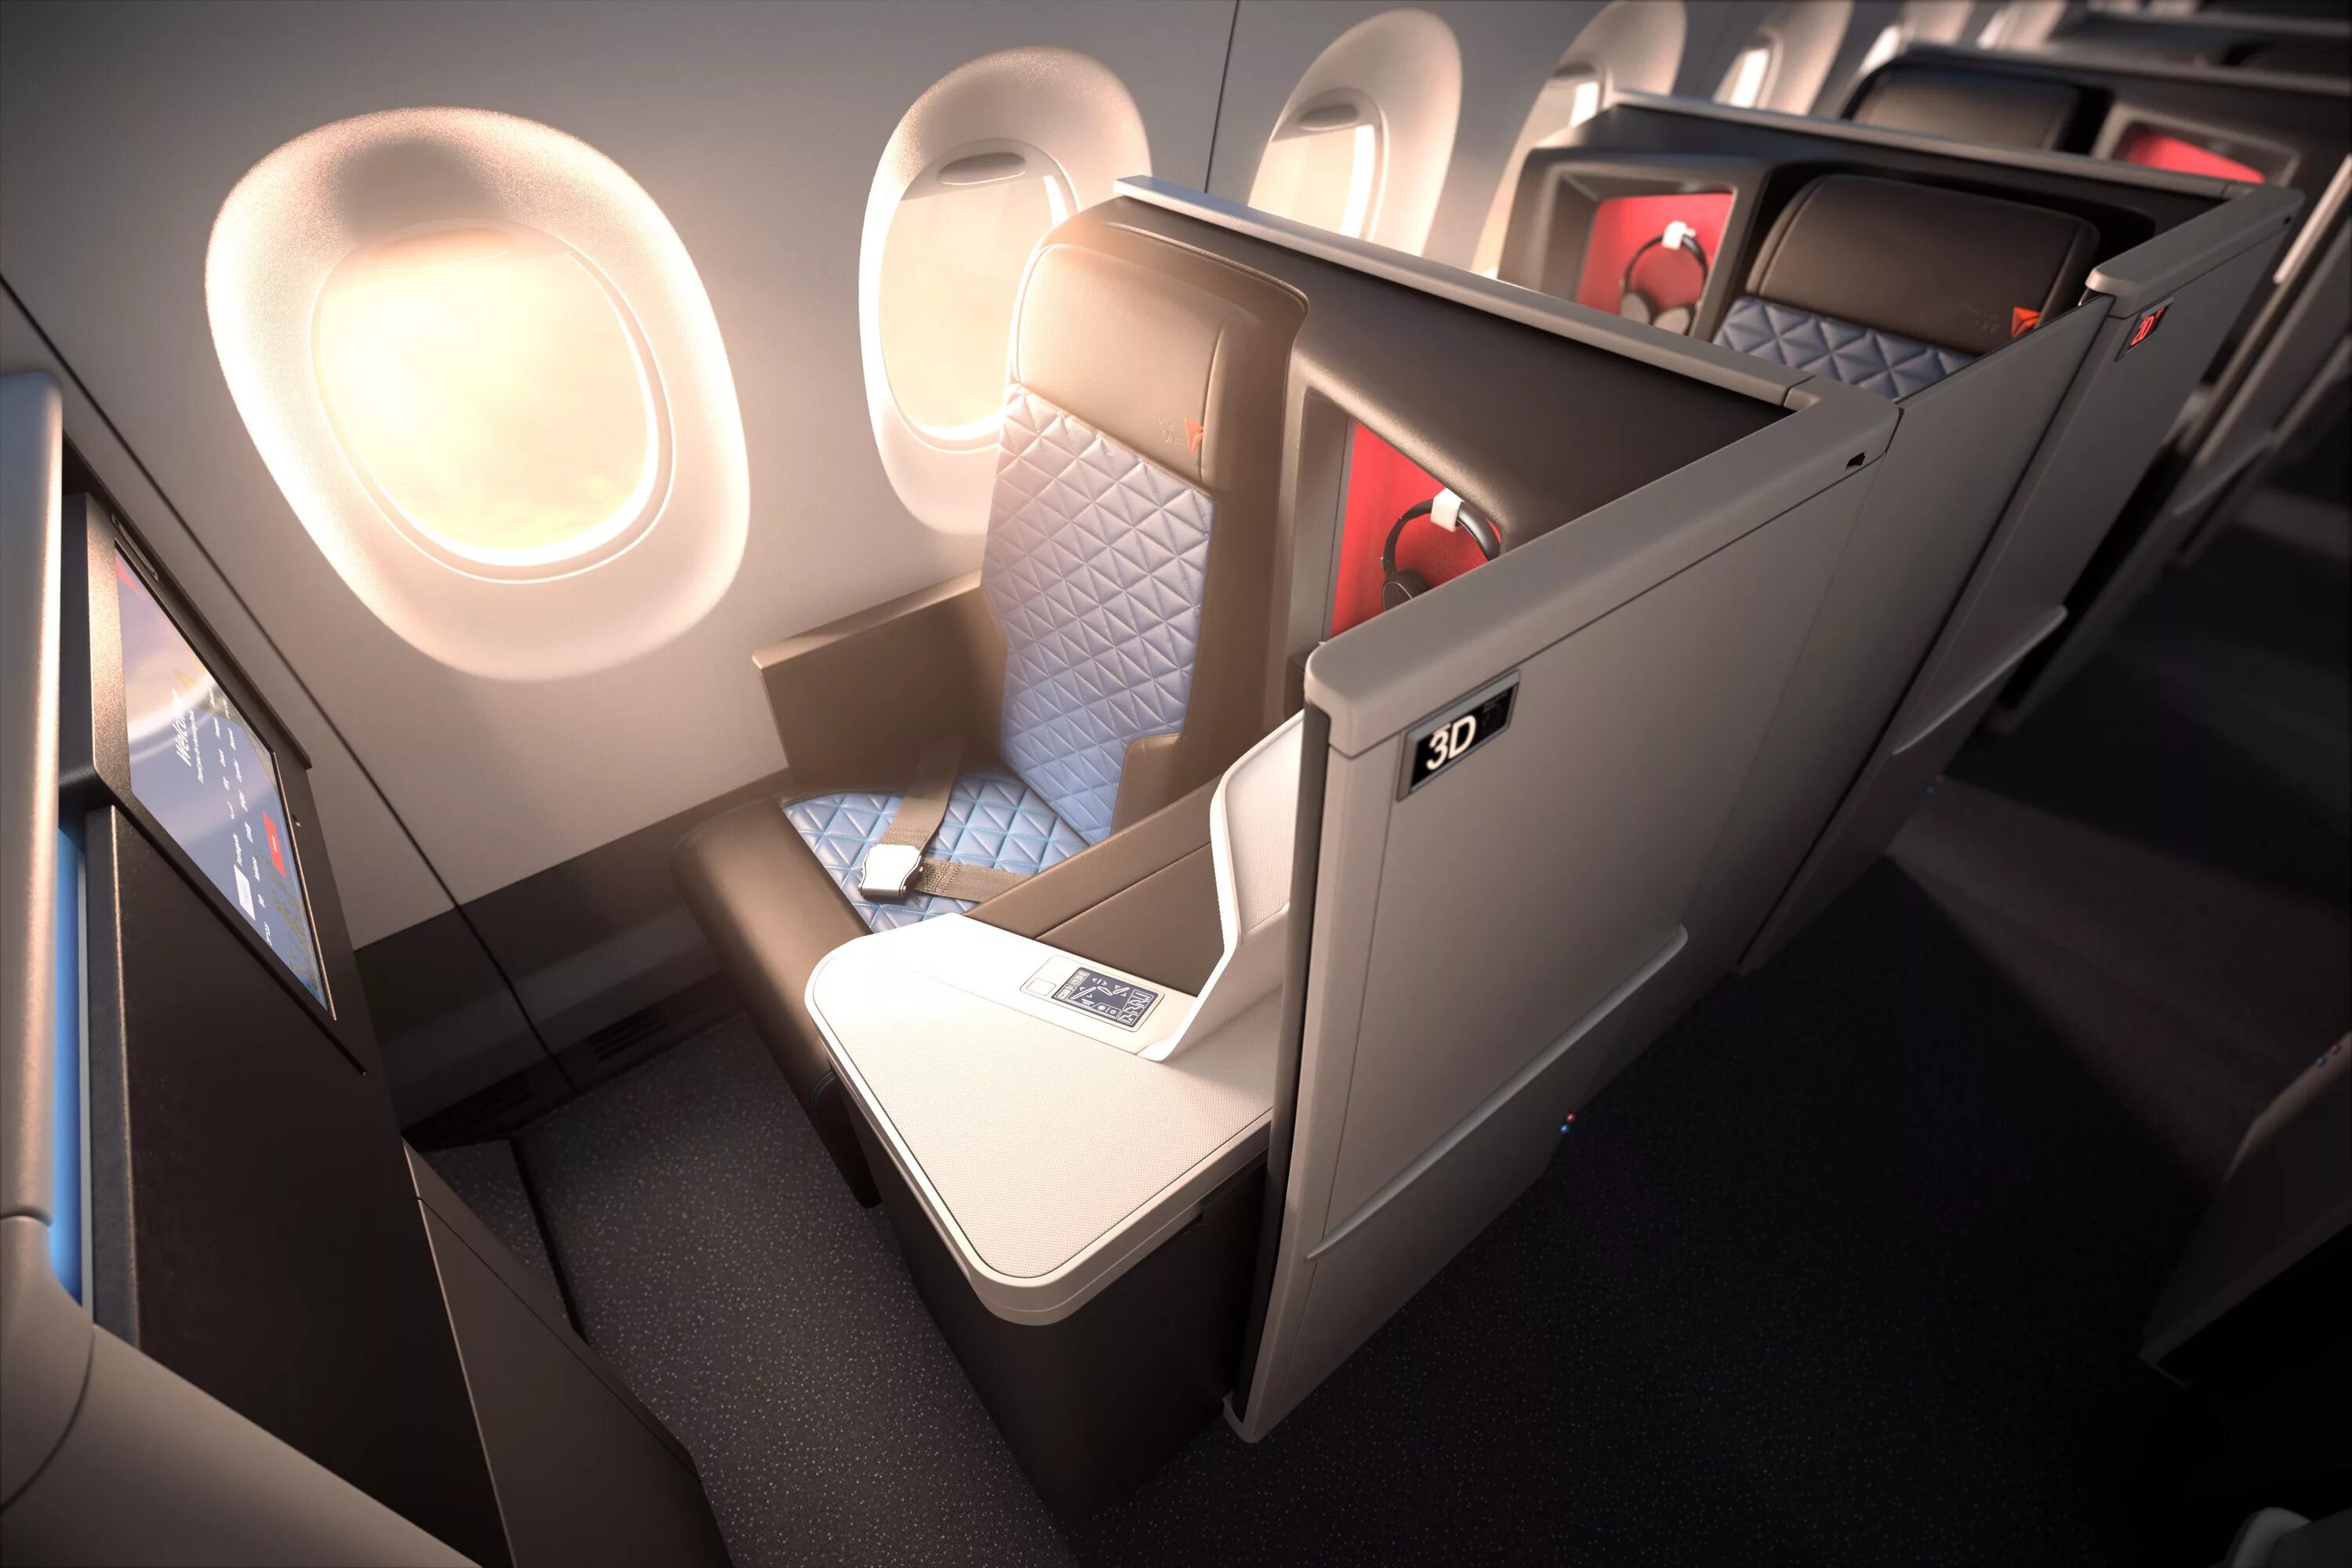 Delta Business class. A350 first class. Airbus a350 бизнес класс. Delta Airlines first class.